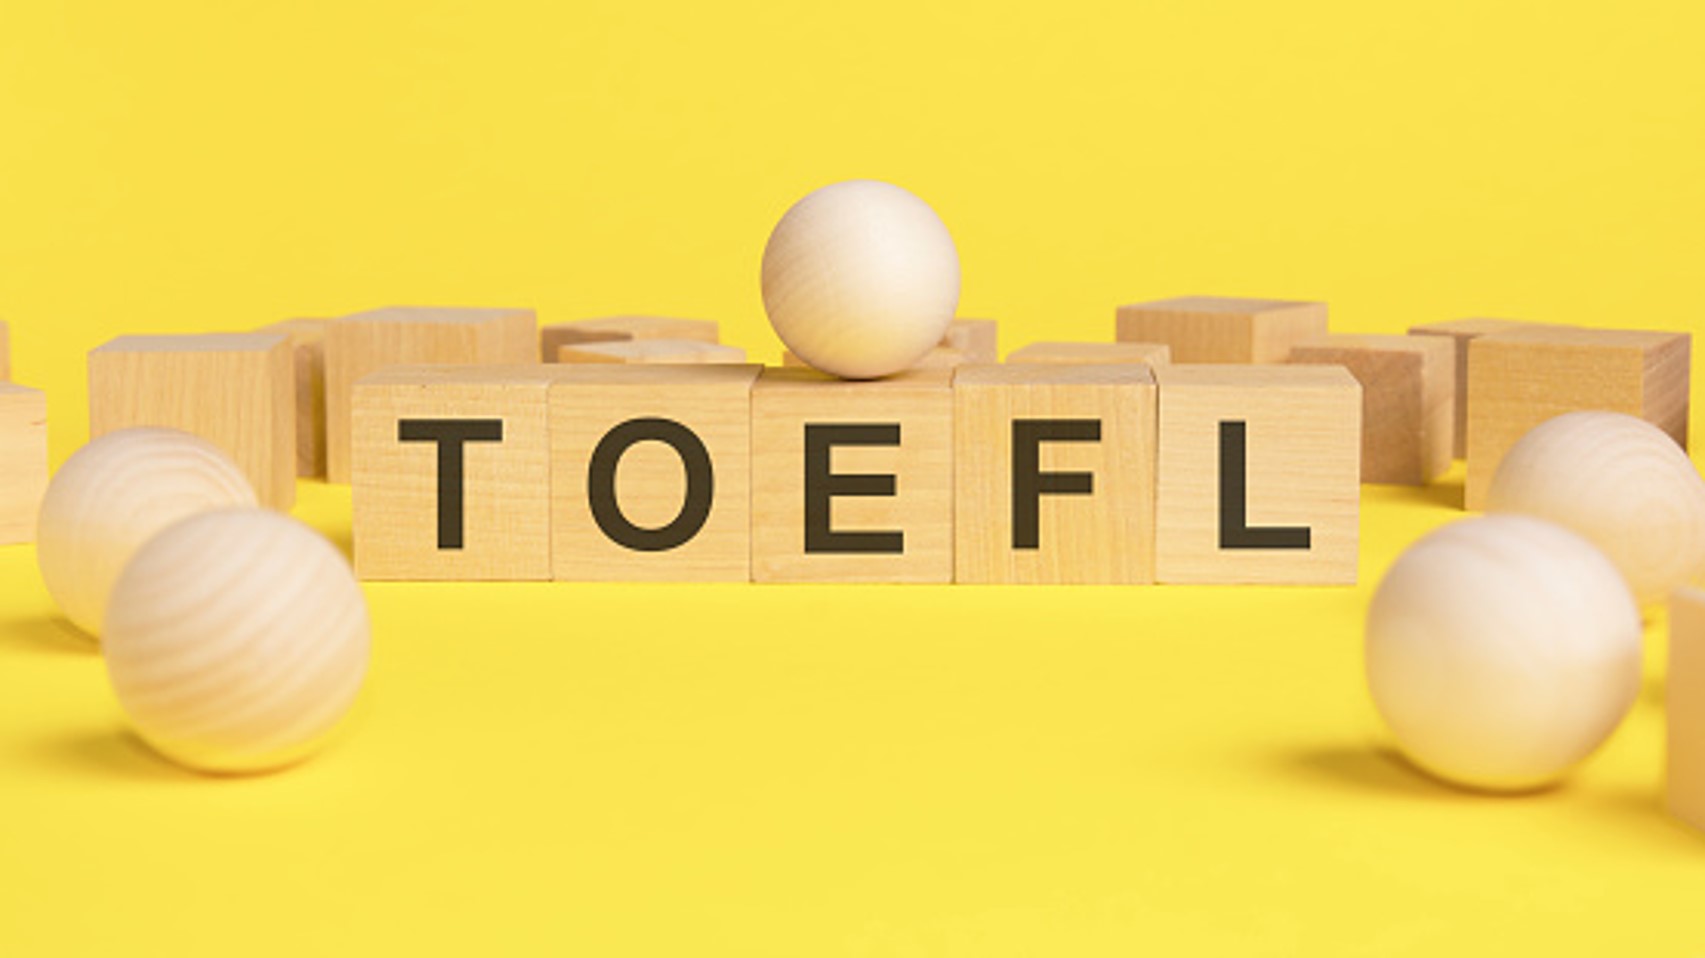 Free TOEFL preparation resources